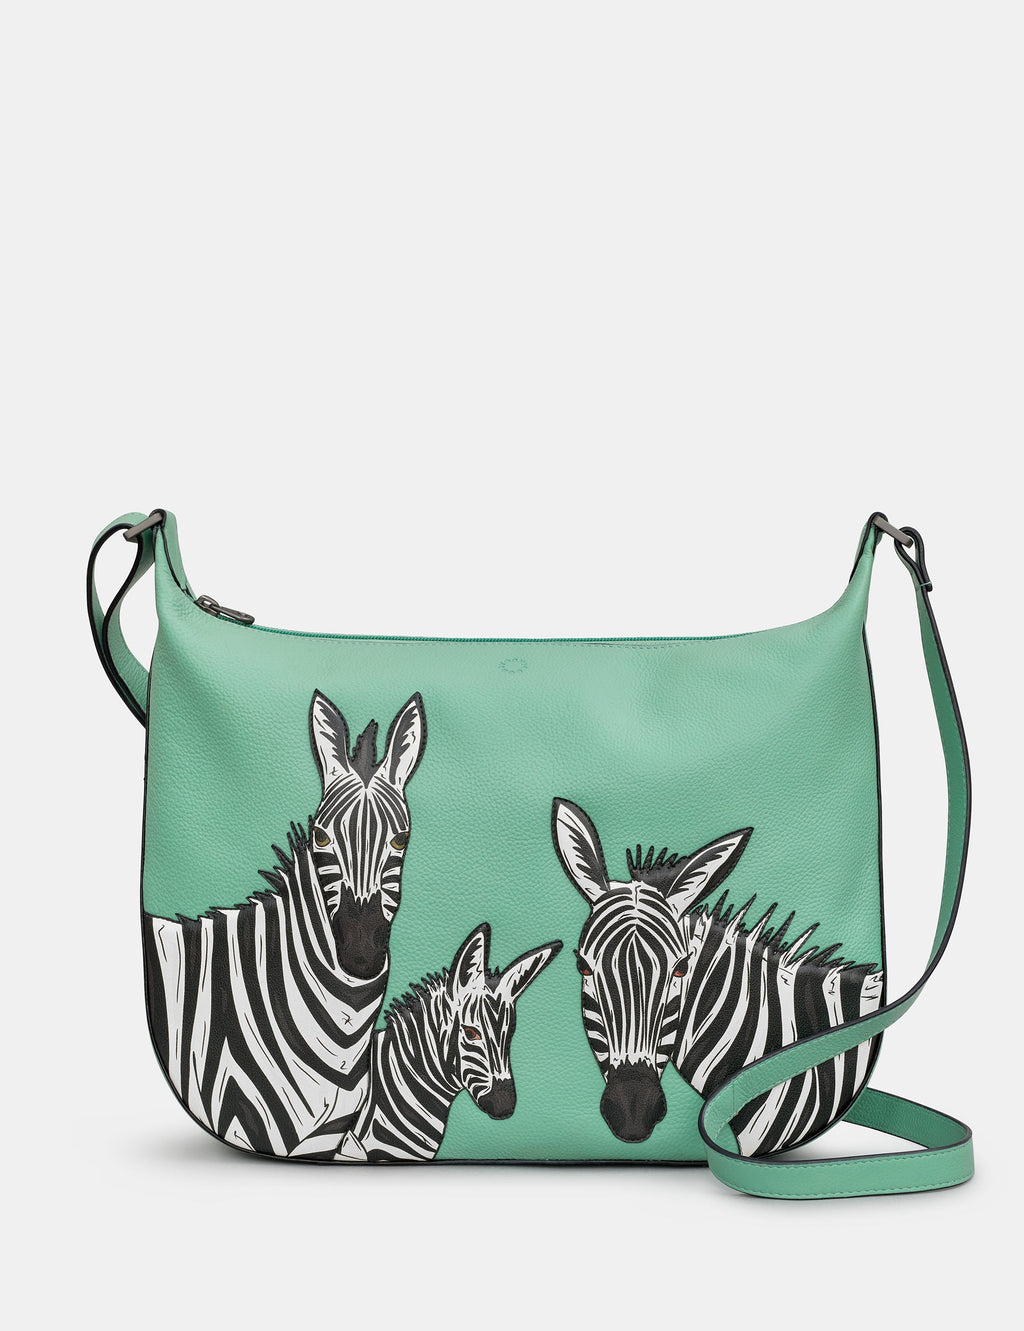 Yoshi - Mint Green Zebra Leather Hobo Bag